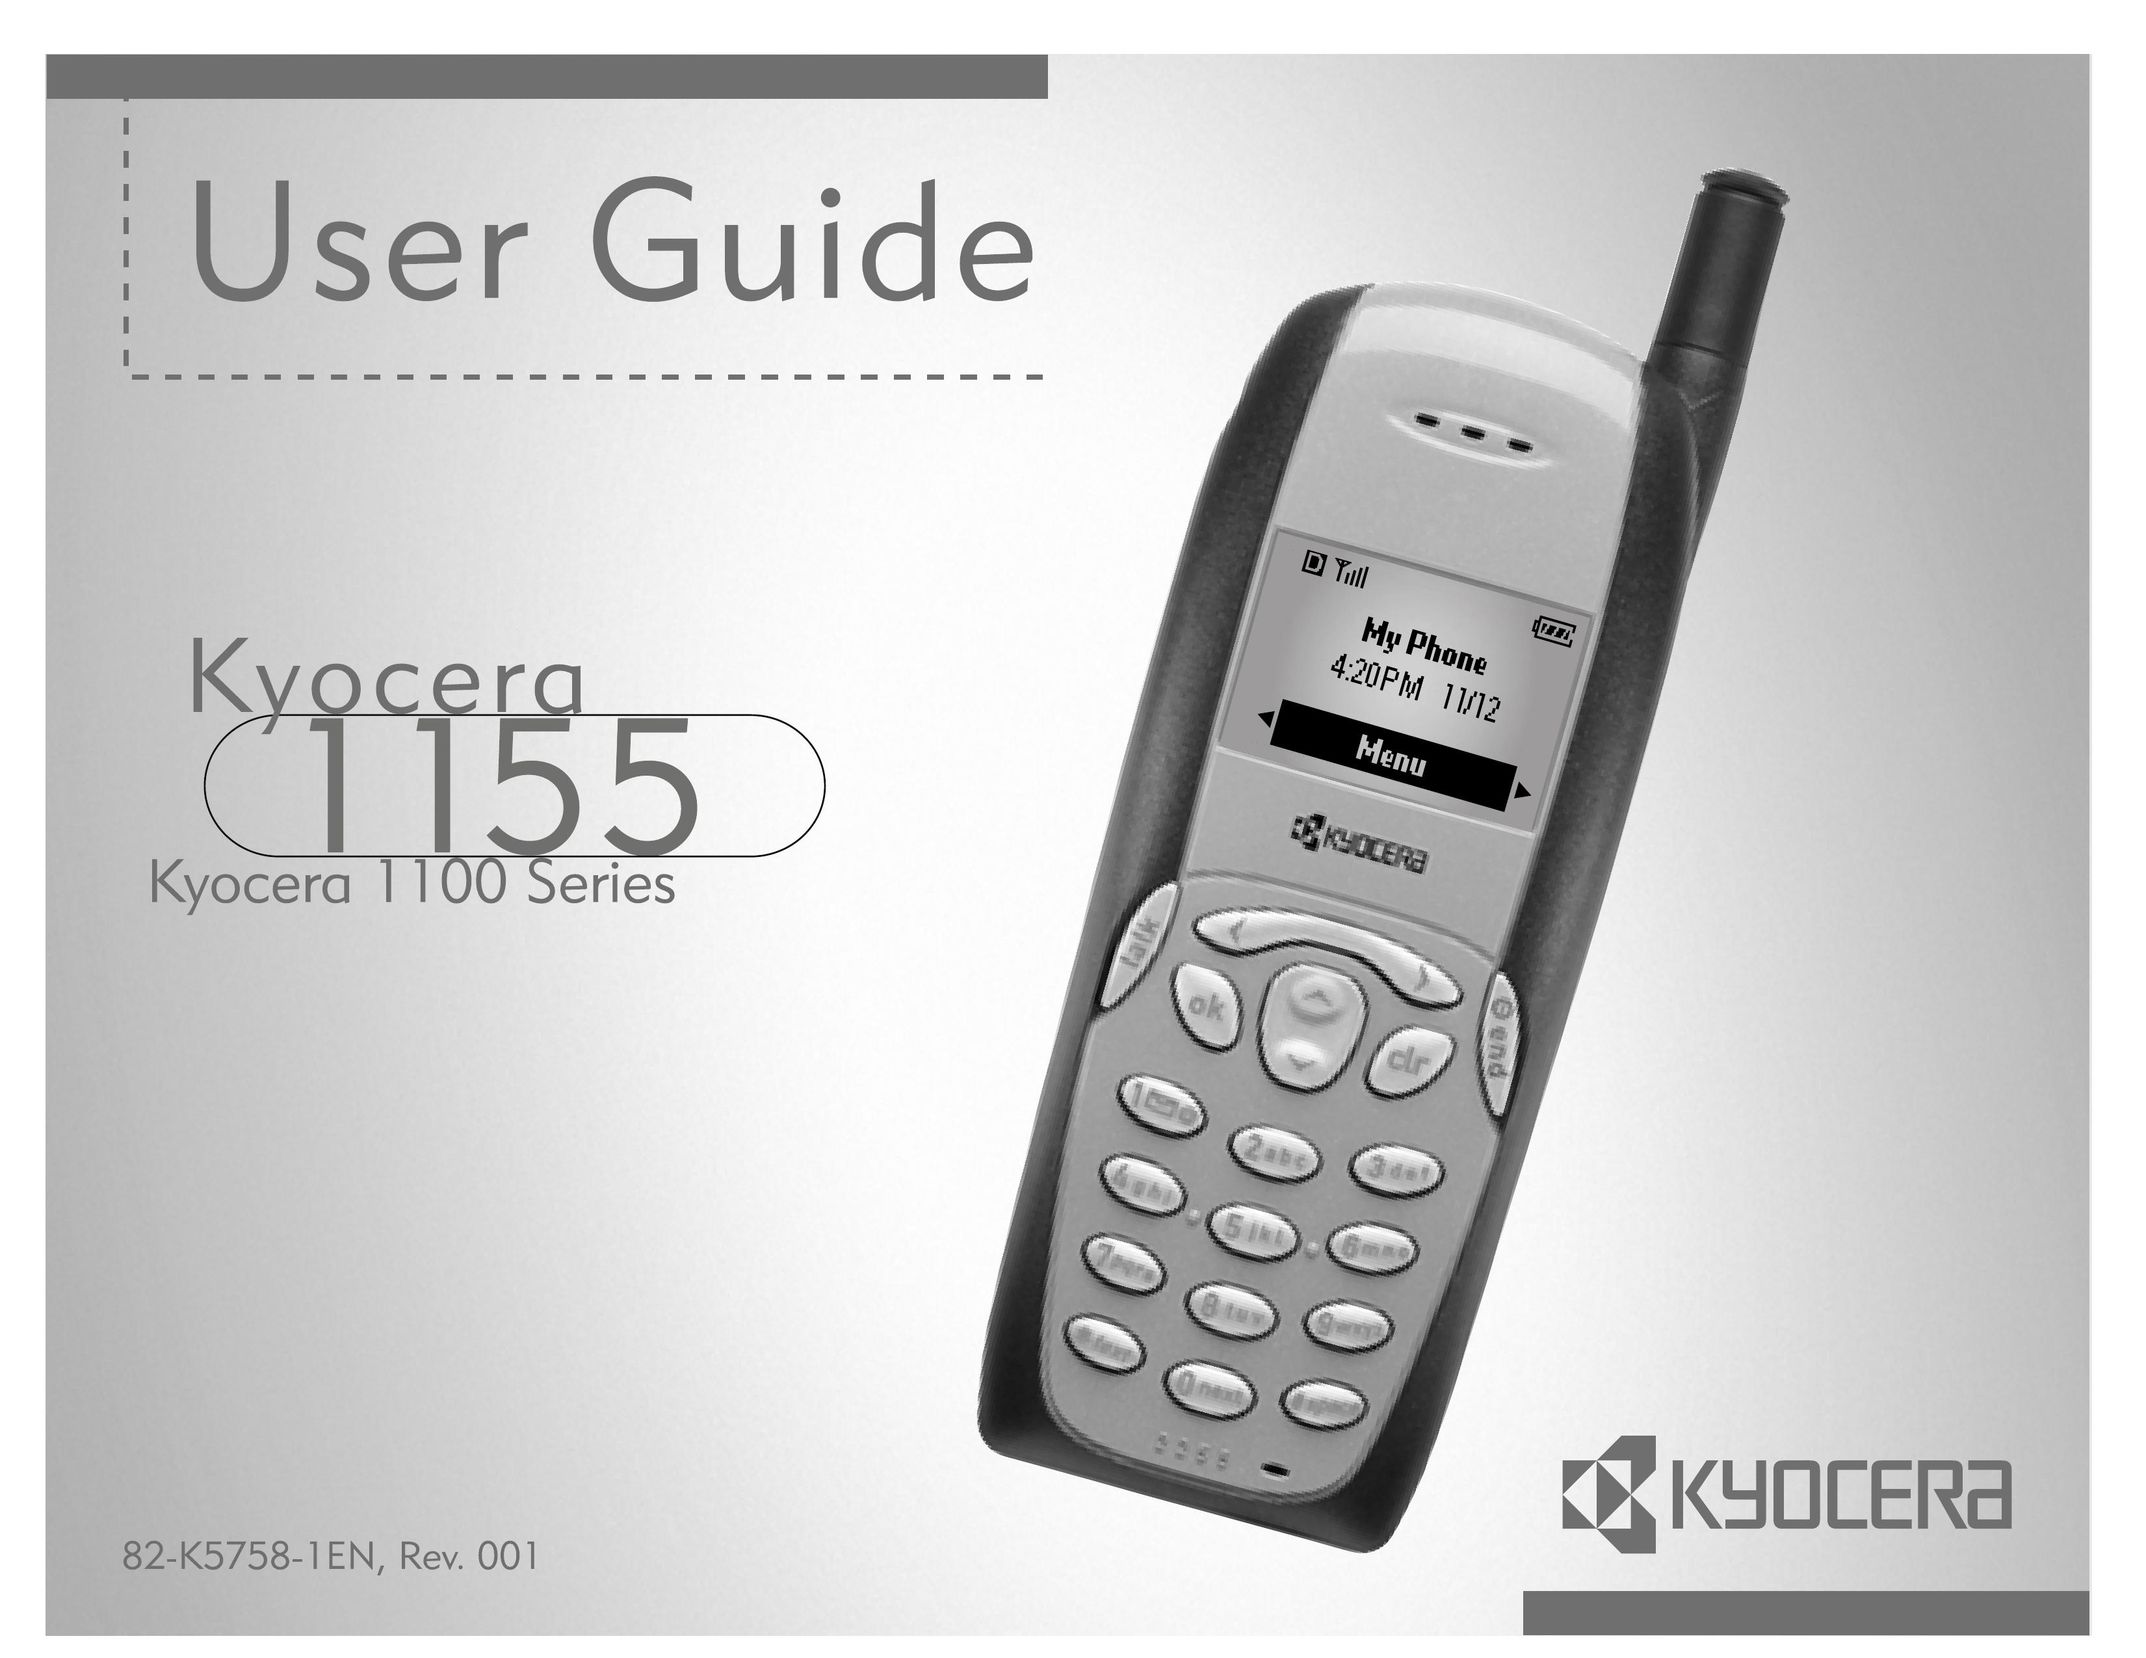 Kyocera 1155 Cell Phone User Manual